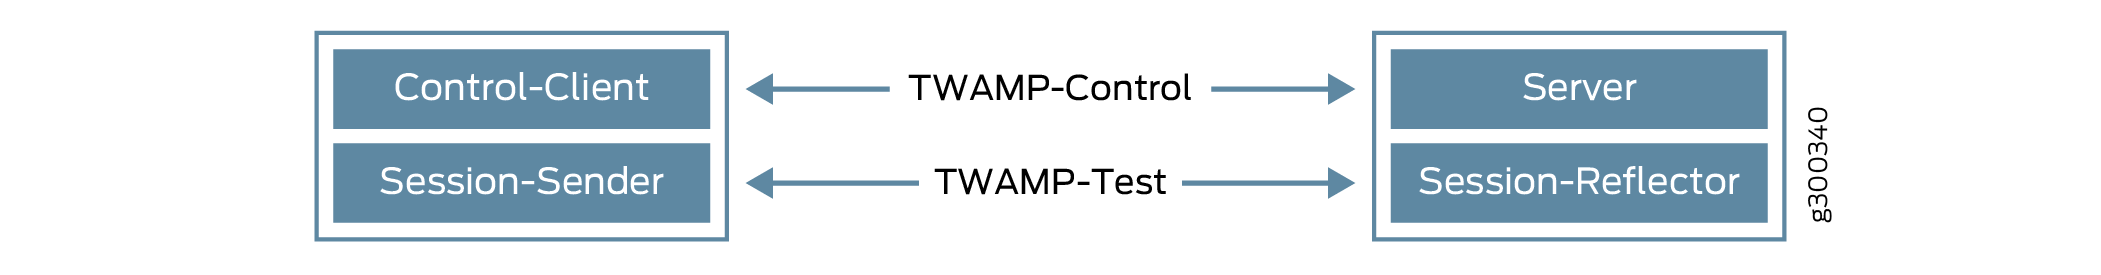 Configuring TWAMP Client and TWAMP Server